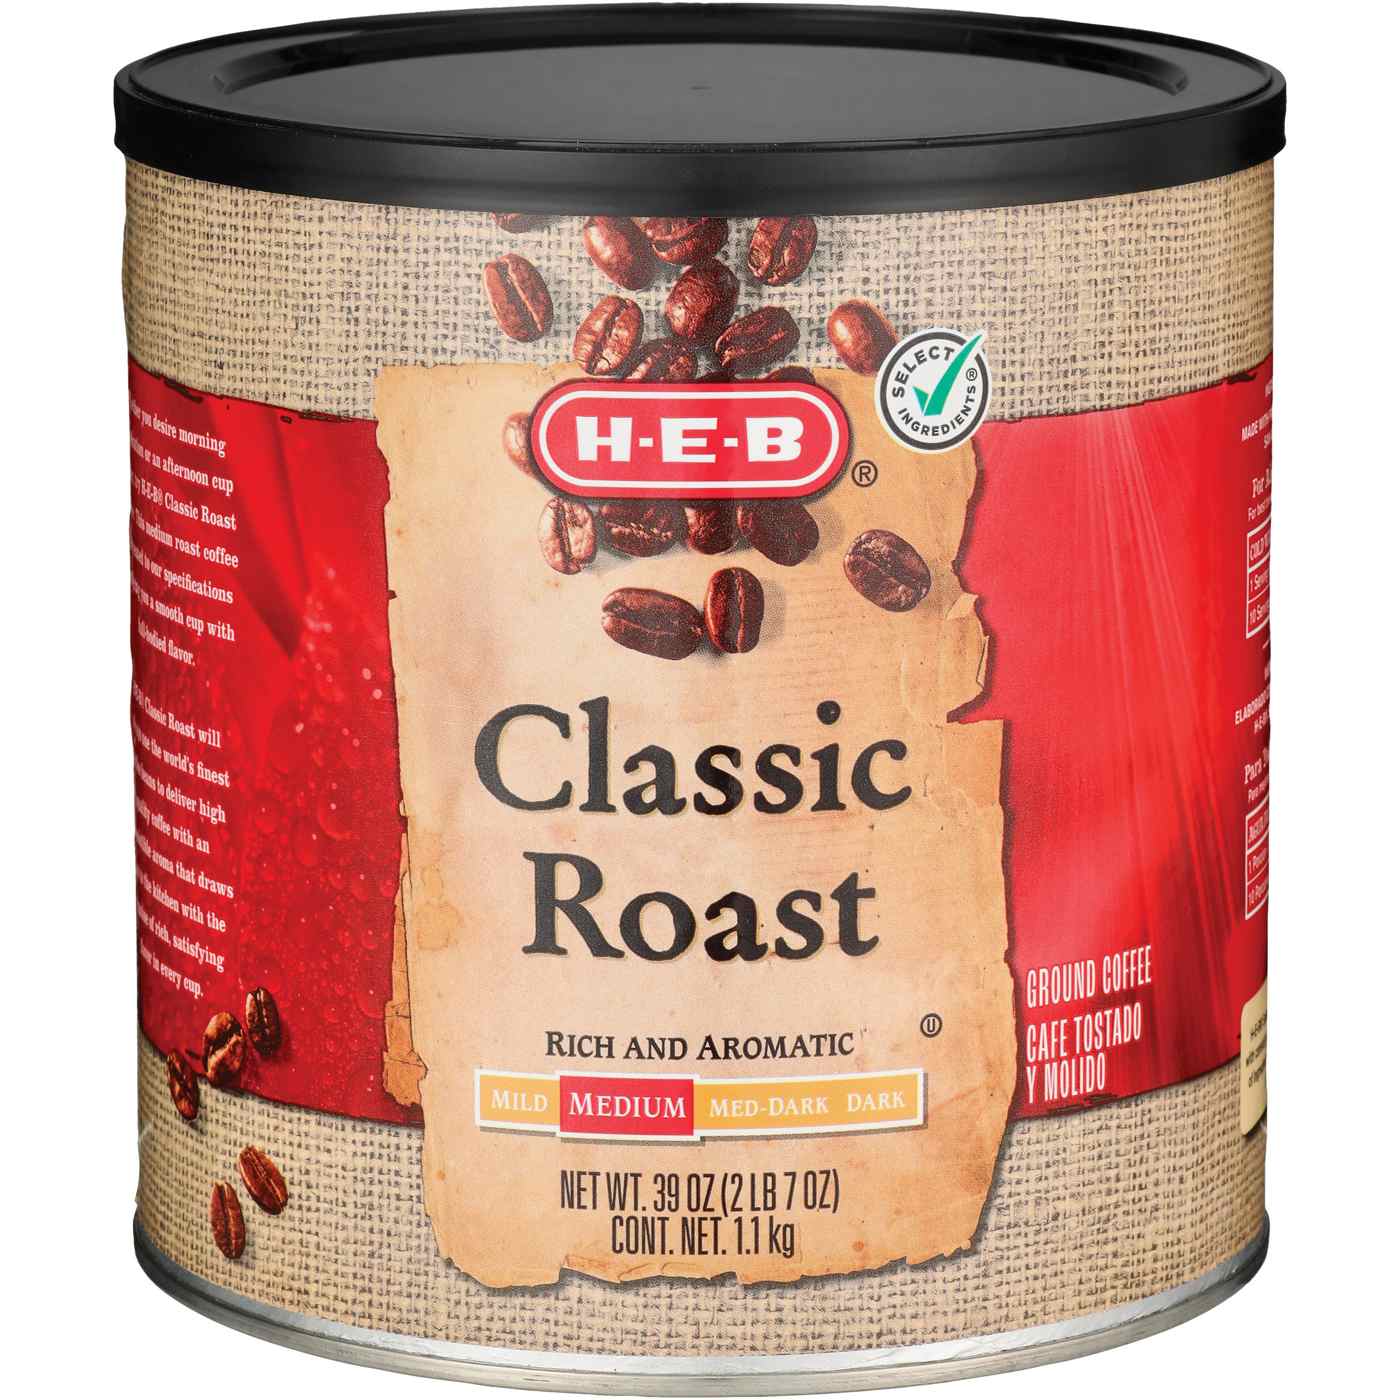 H-E-B Classic Roast Medium Ground Coffee; image 2 of 2